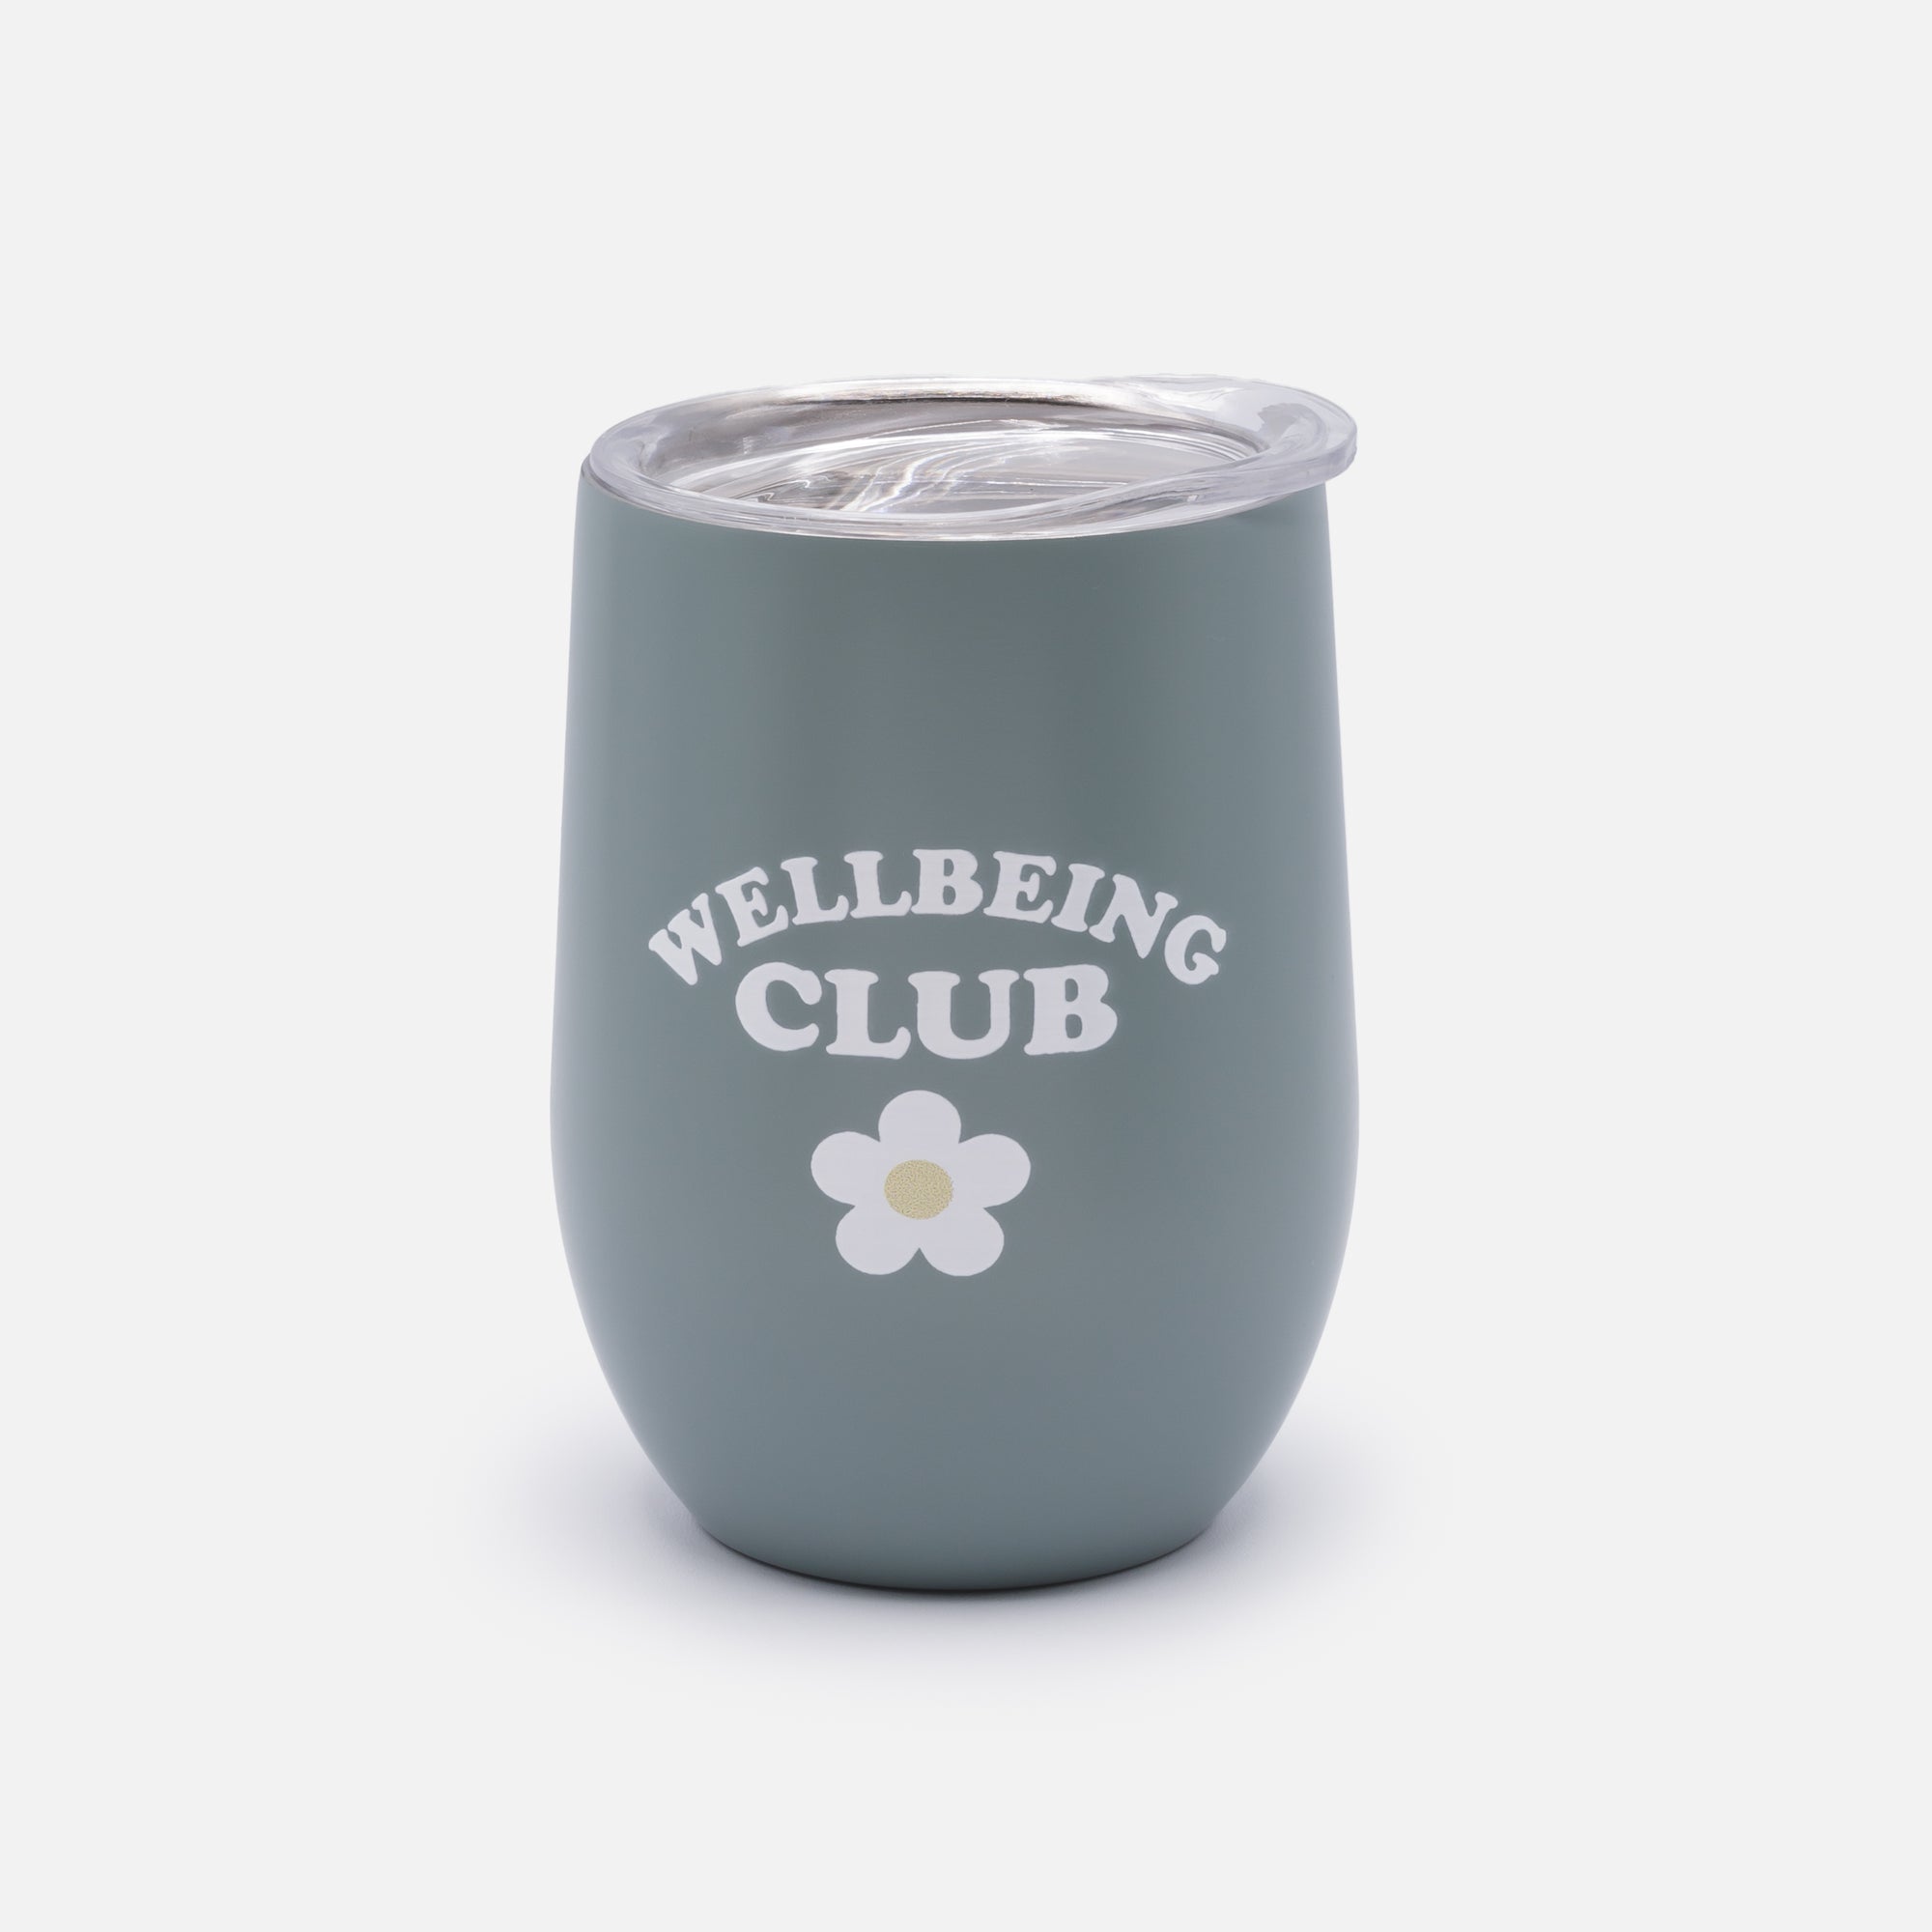 'Wellbeing CLUB' sage green stainless steel travel mug